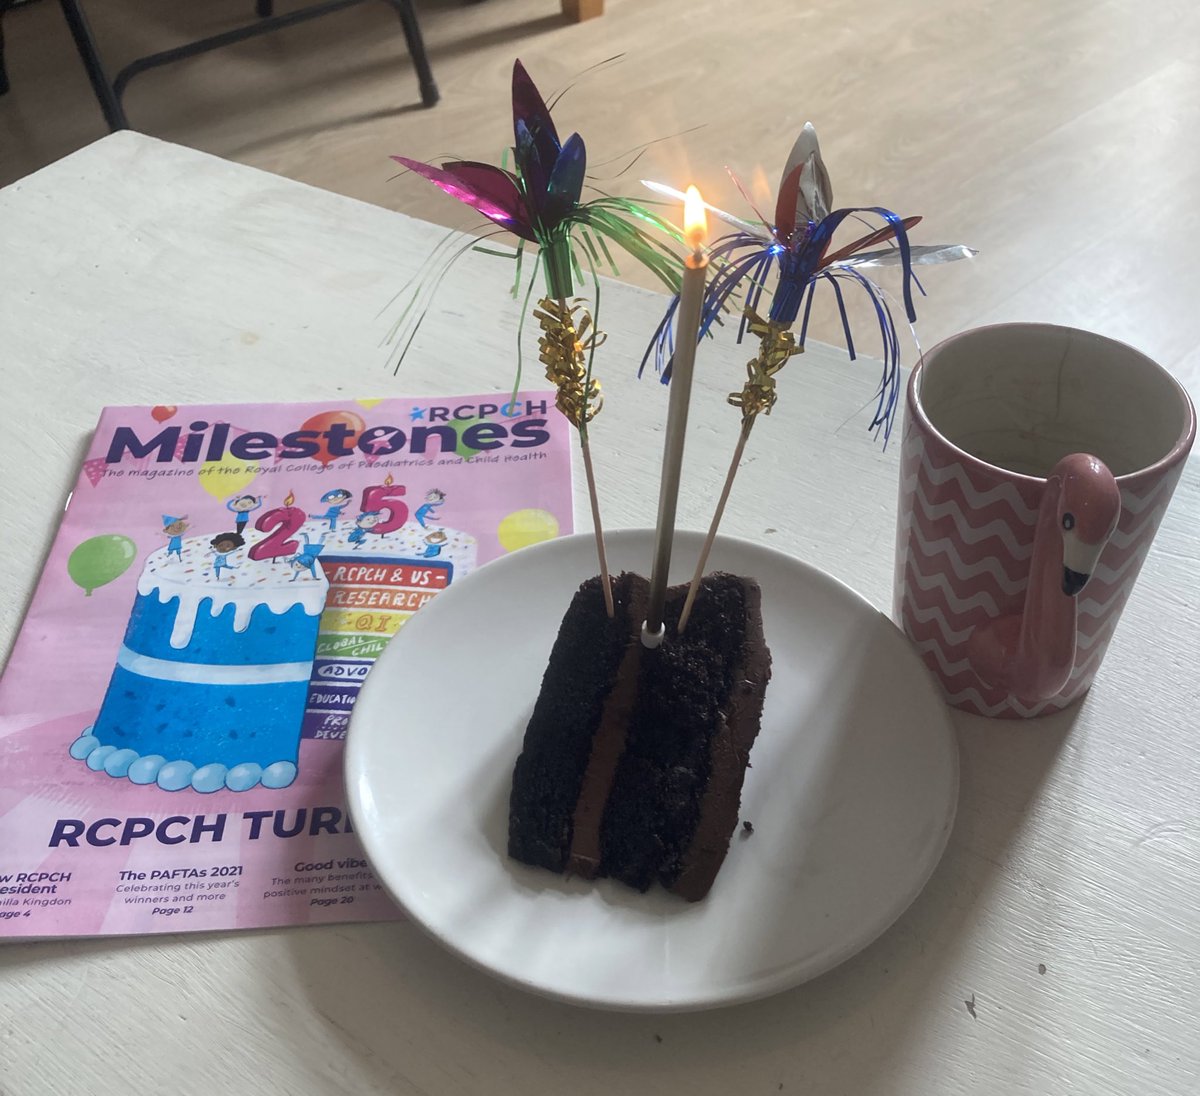 @RCPCHtweets @DrKidneyAsh Happy 25th Birthday to you! 🎉Celebrating with chocolate fudge cake & #RCPCHMilestones !
#HaveYourCakeandReadIt